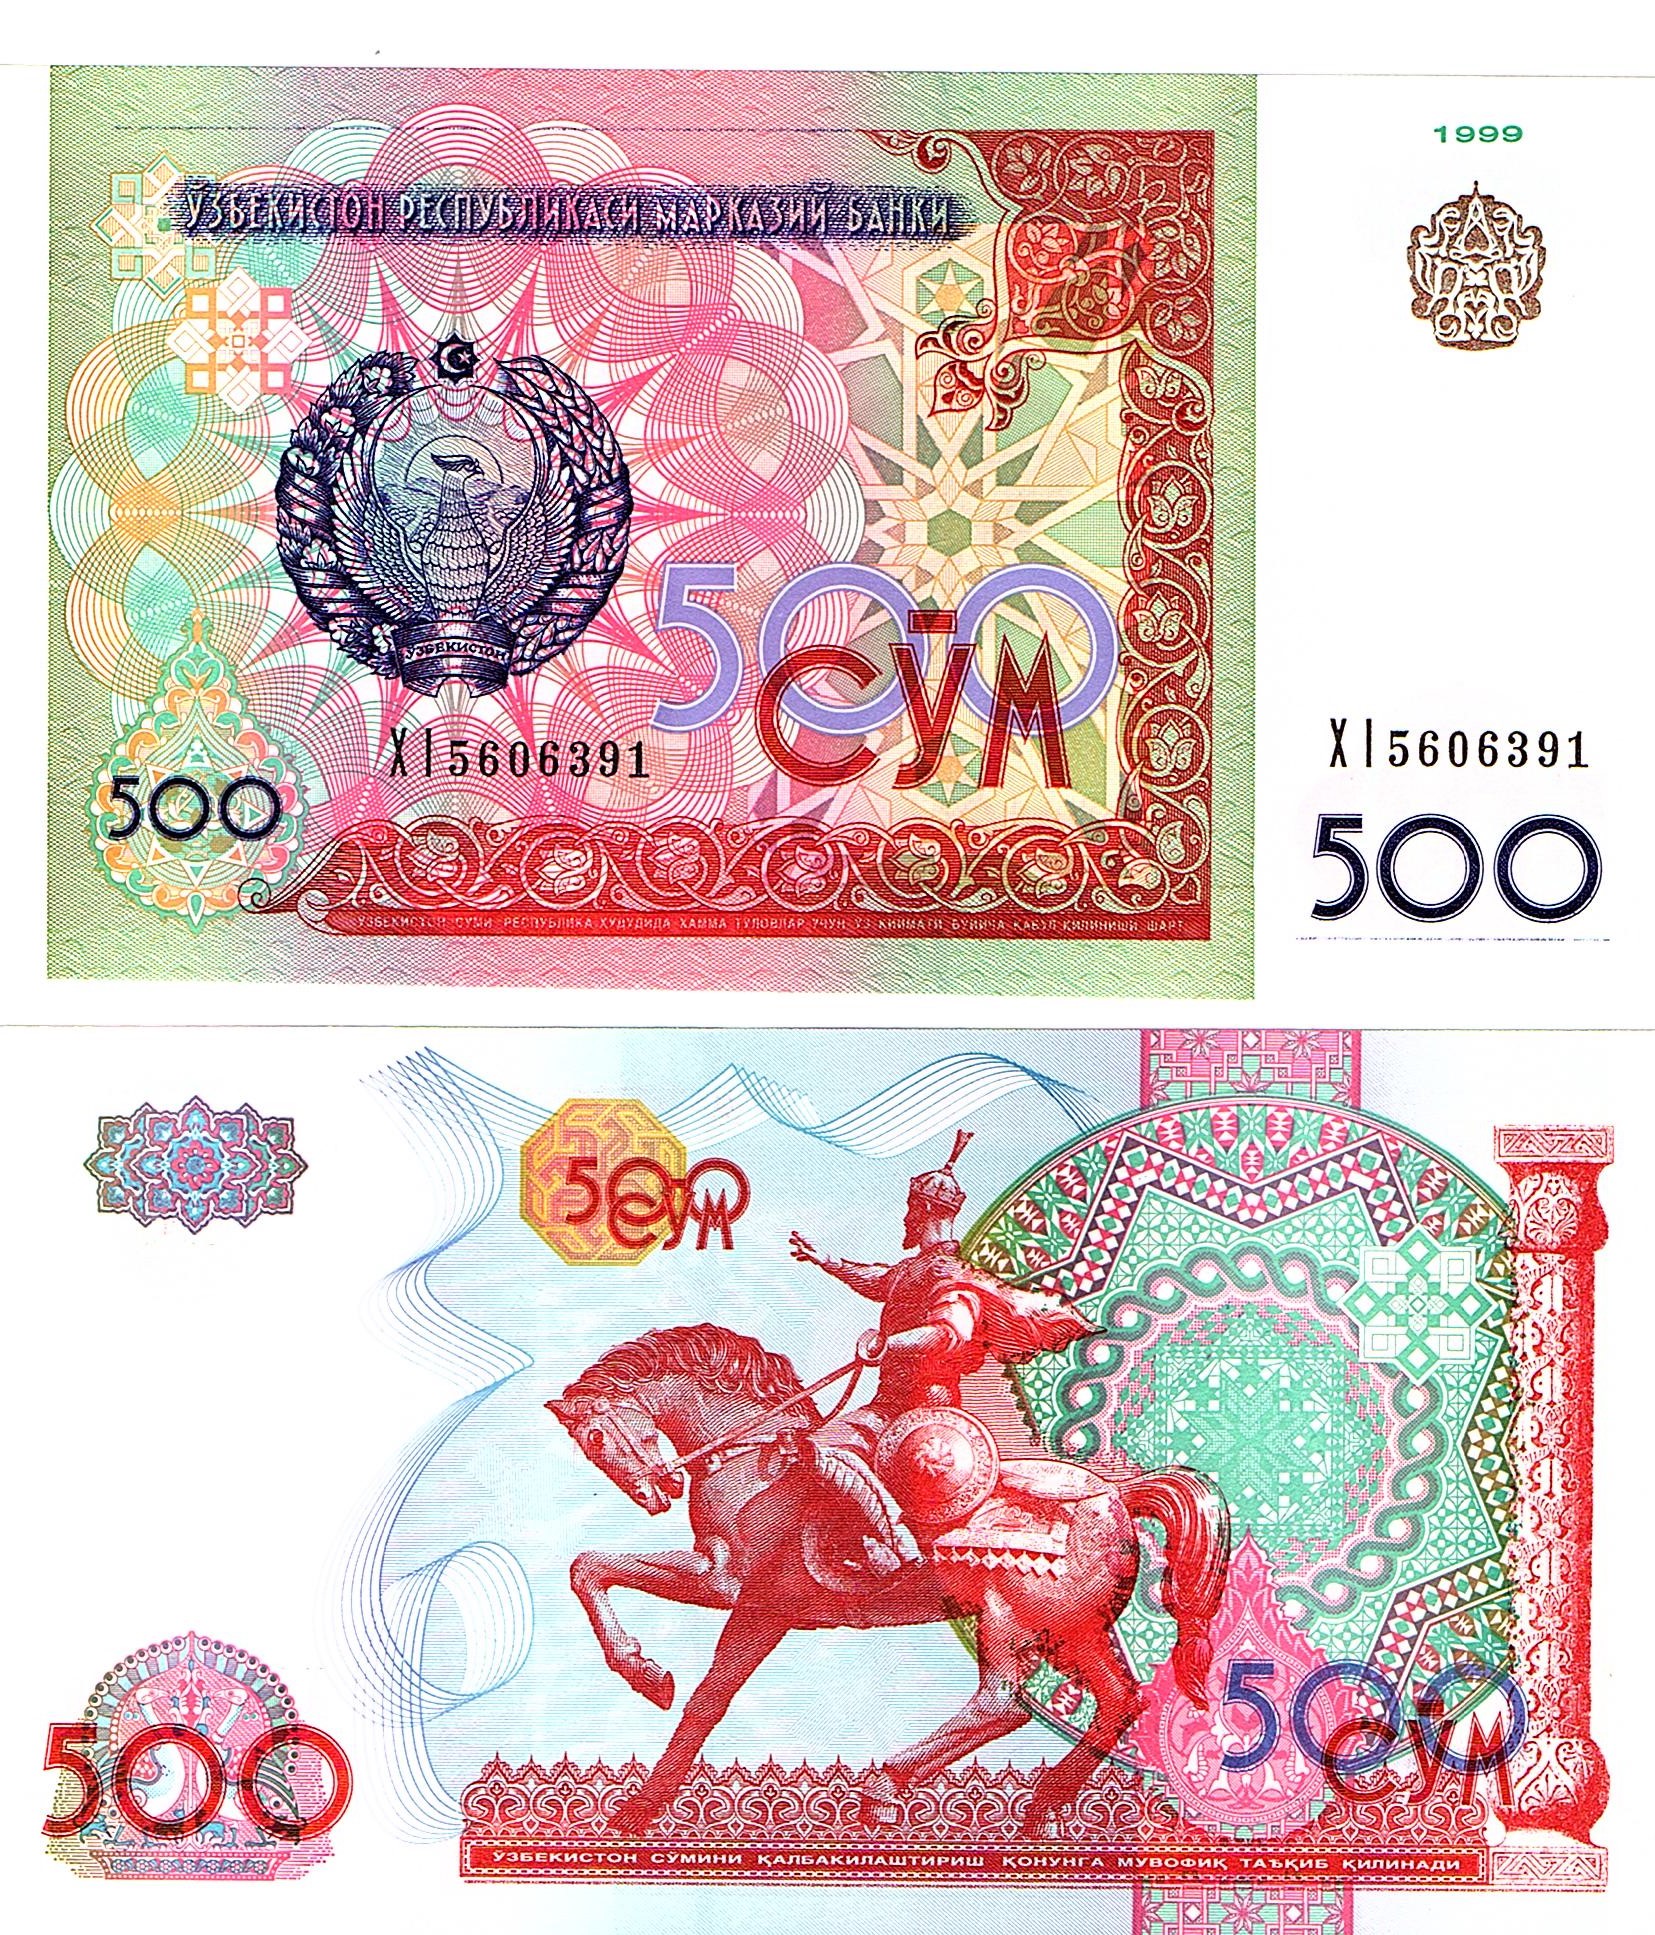 Uzbekistan #81 500 Sum